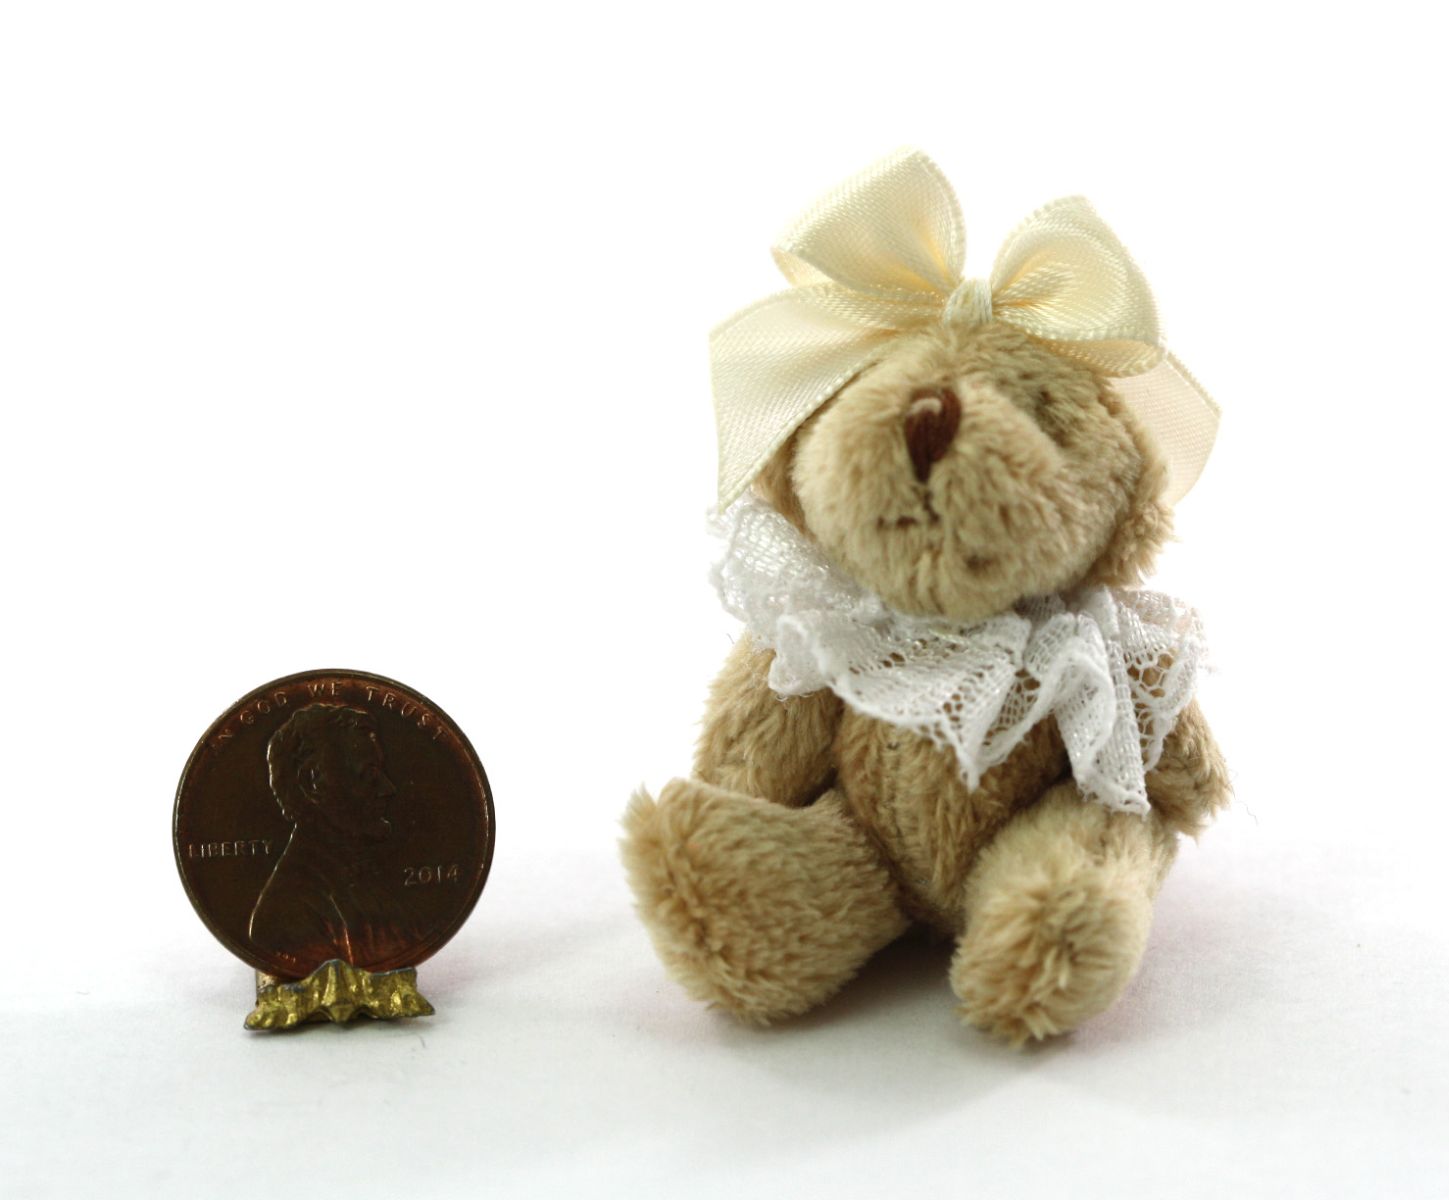 Soft & Fuzzy Teddy Bear with Lace Collar & Bow